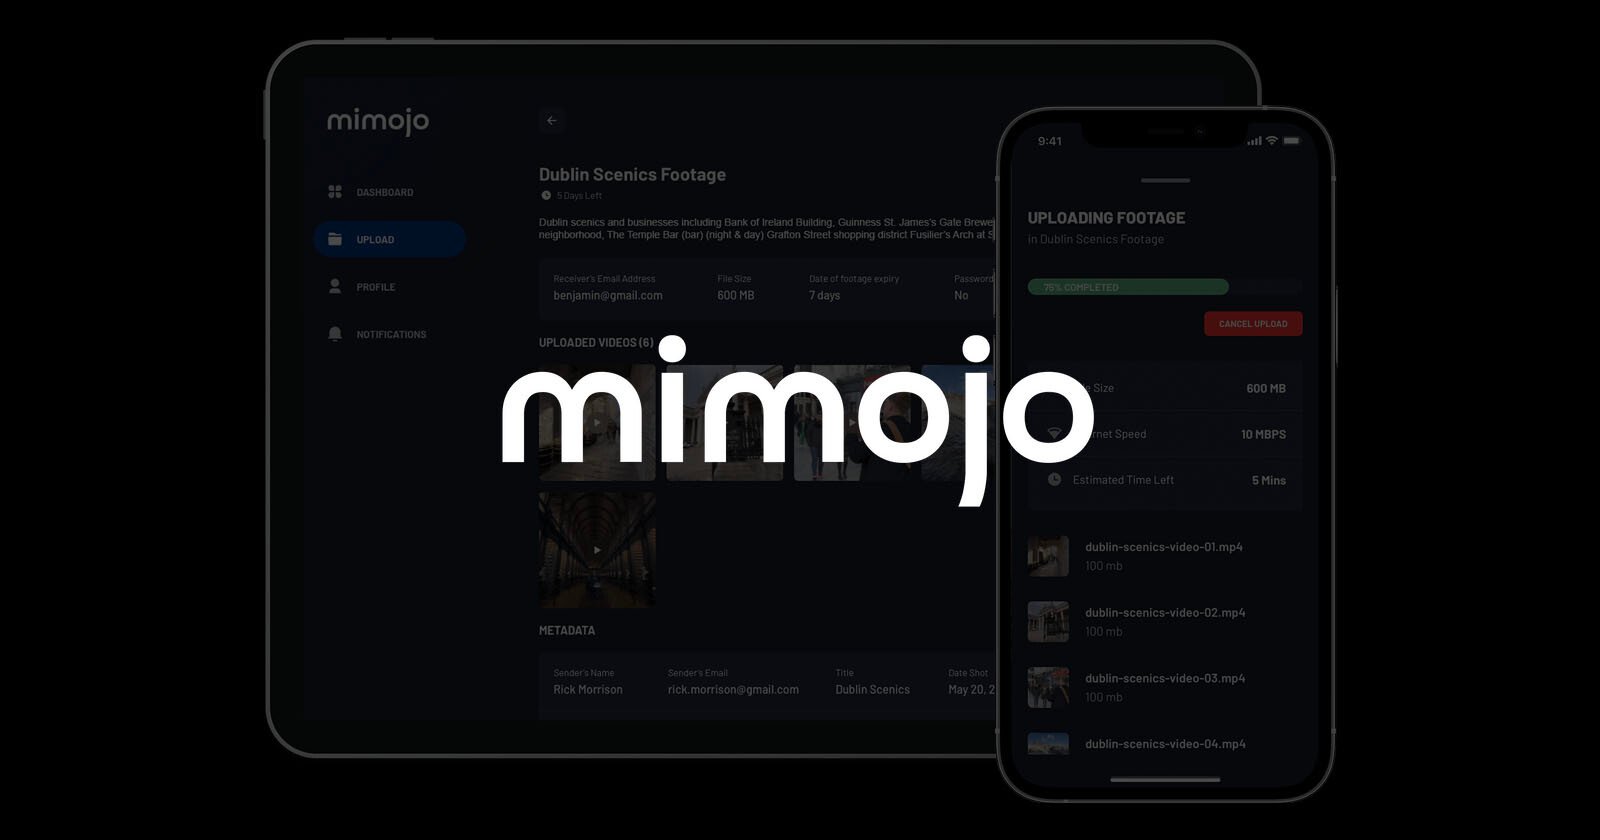  mimojo pro-level app sending receiving 